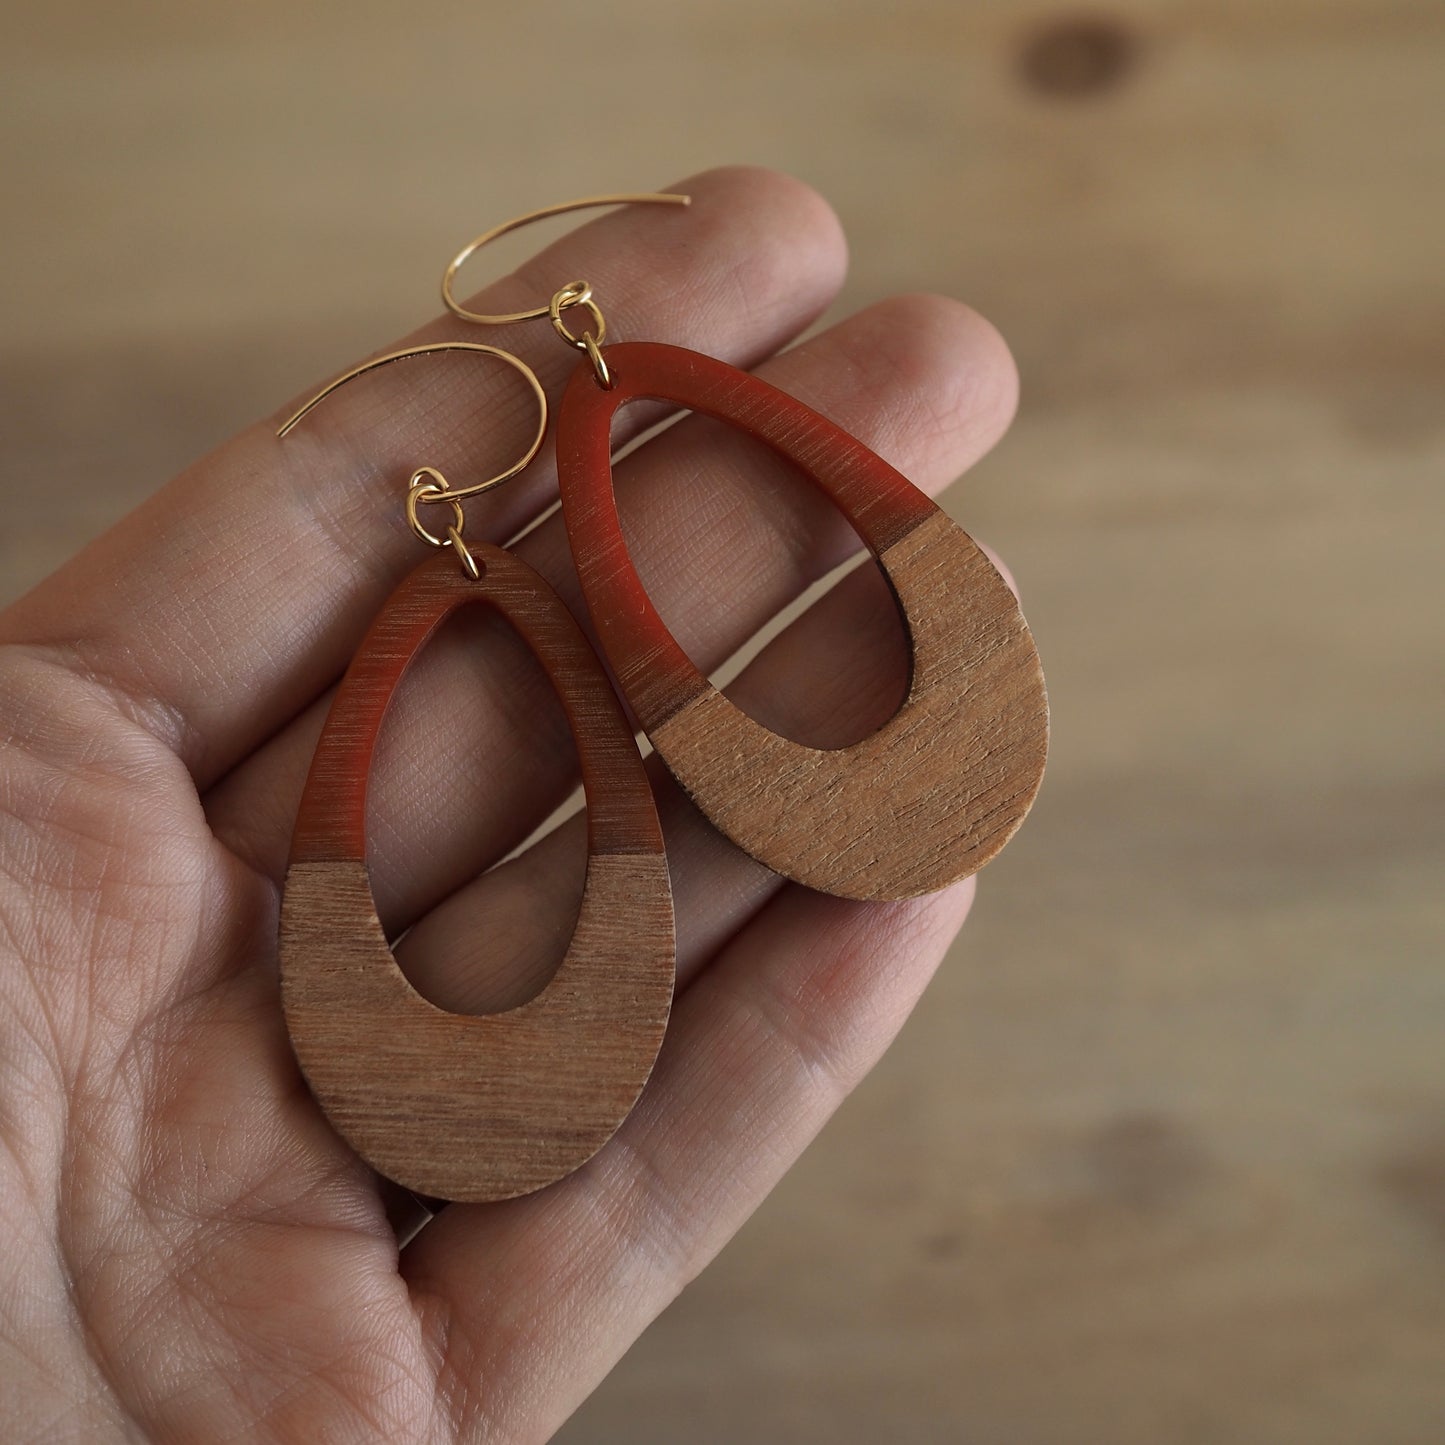 Rust and Wood Teardrop Earrings by Nancy Wallis Designs